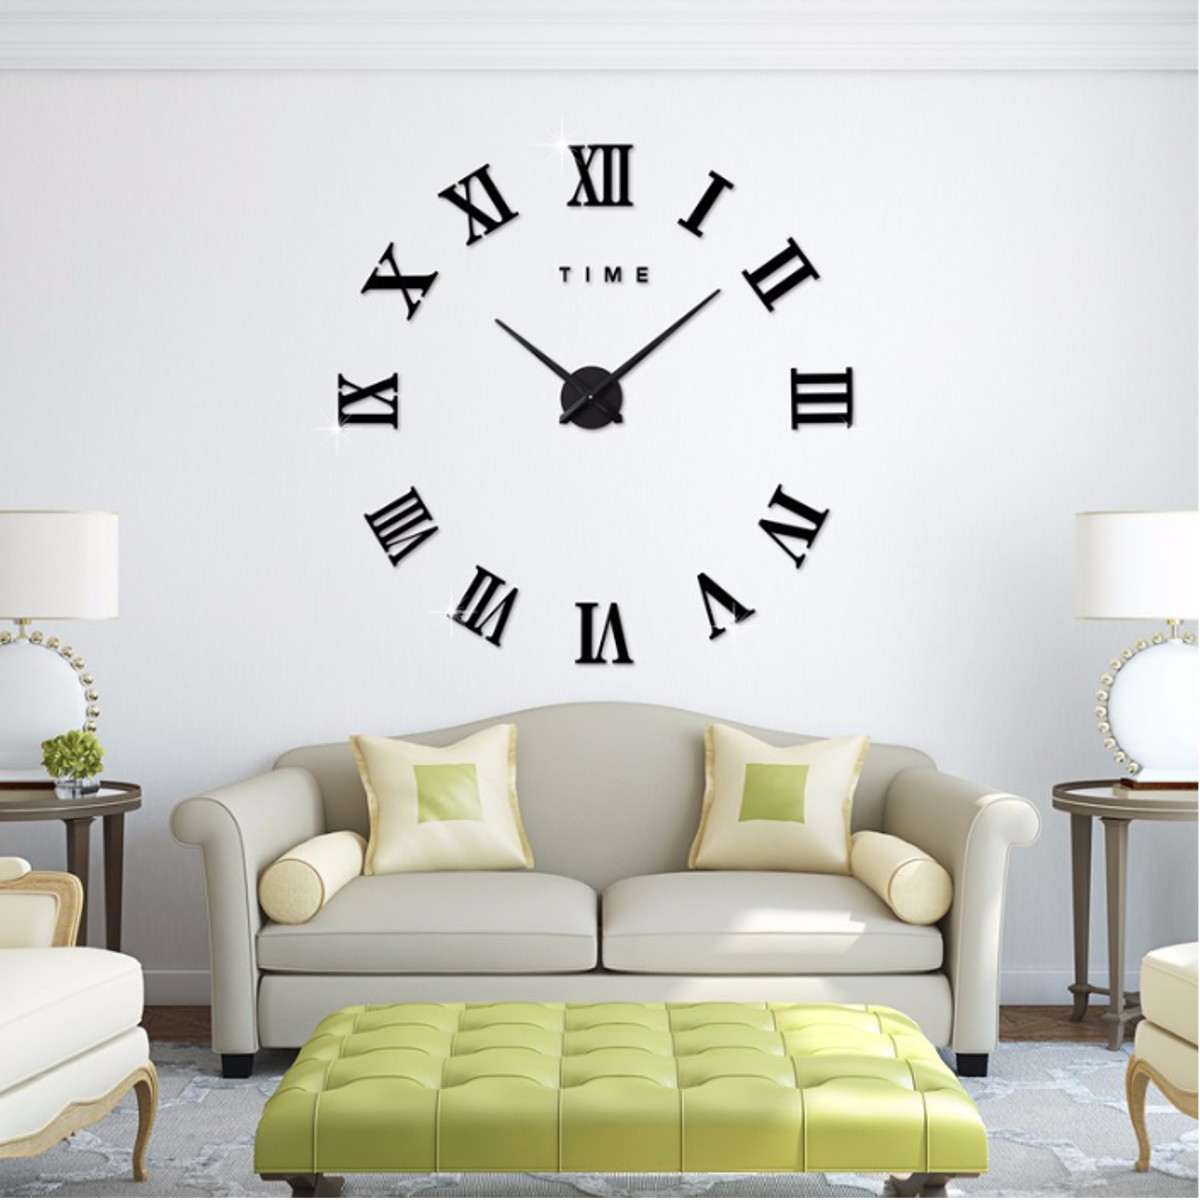 

Modern Design DIY Large Decorative 3D Wall Clock Reloj Pared Adhesivo Roman Numerals Mirror Big Clocks Stickers Watches